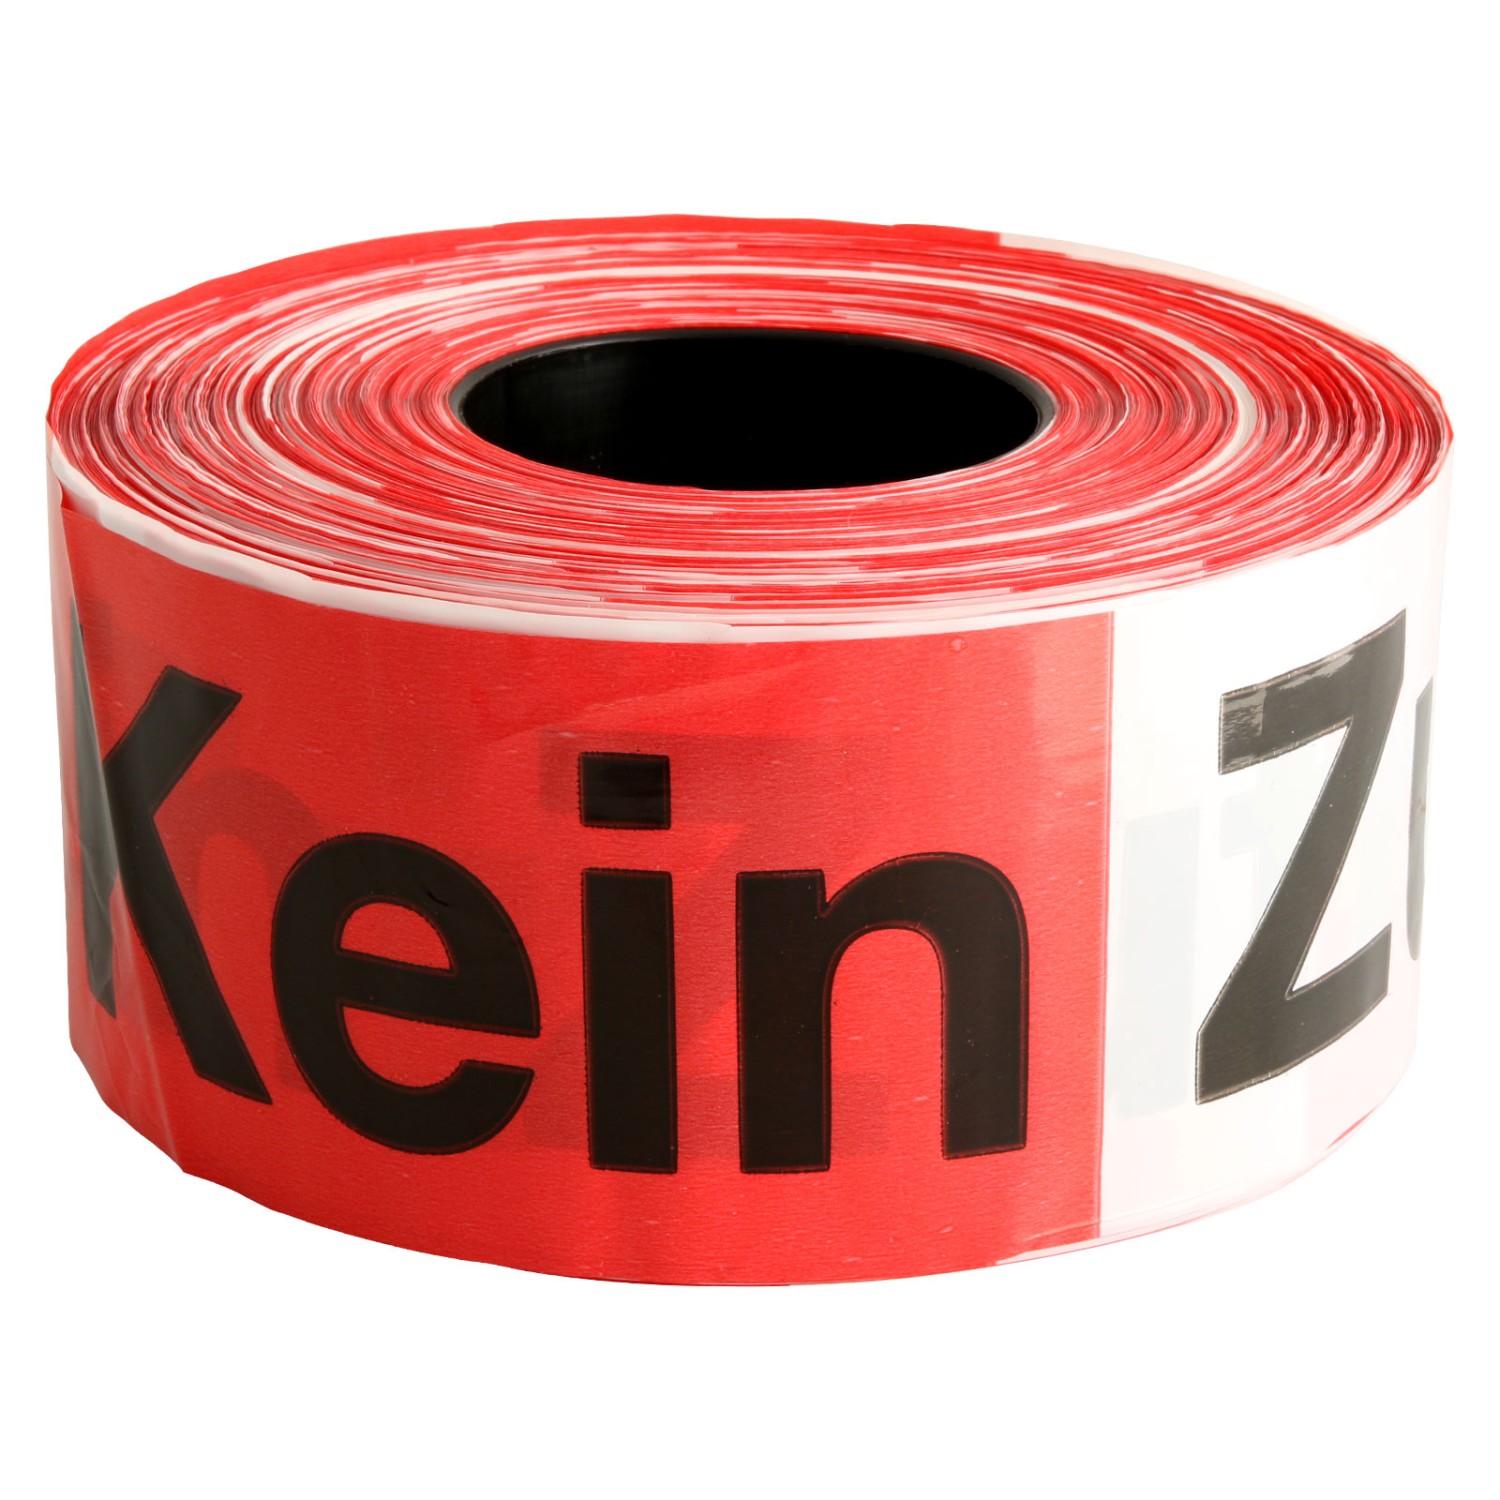 2. Foto Absperrband Flatterband Warnband rot-weiß extrem reißfest 500m lang (Bandaufdruck: Kein Zutritt)